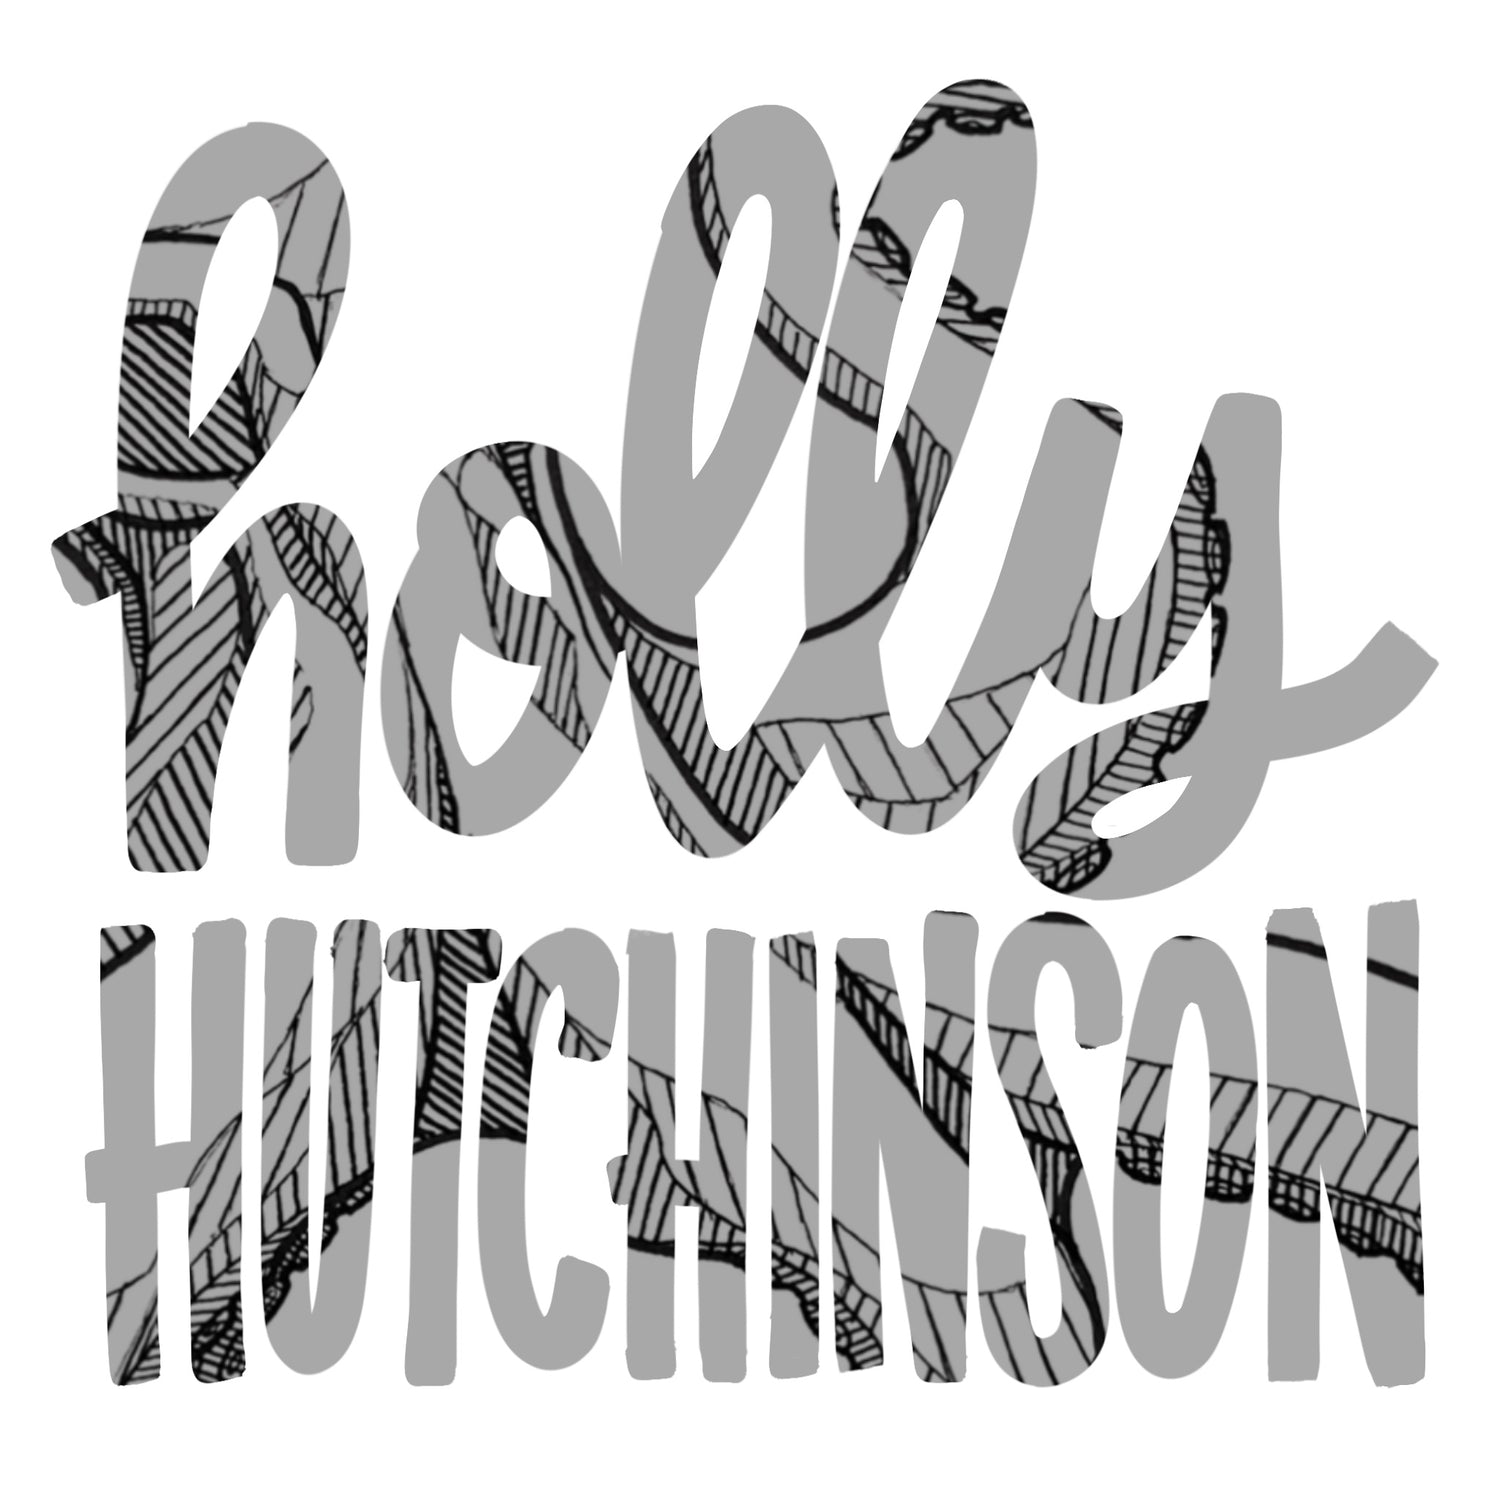 Holly Hutchinson